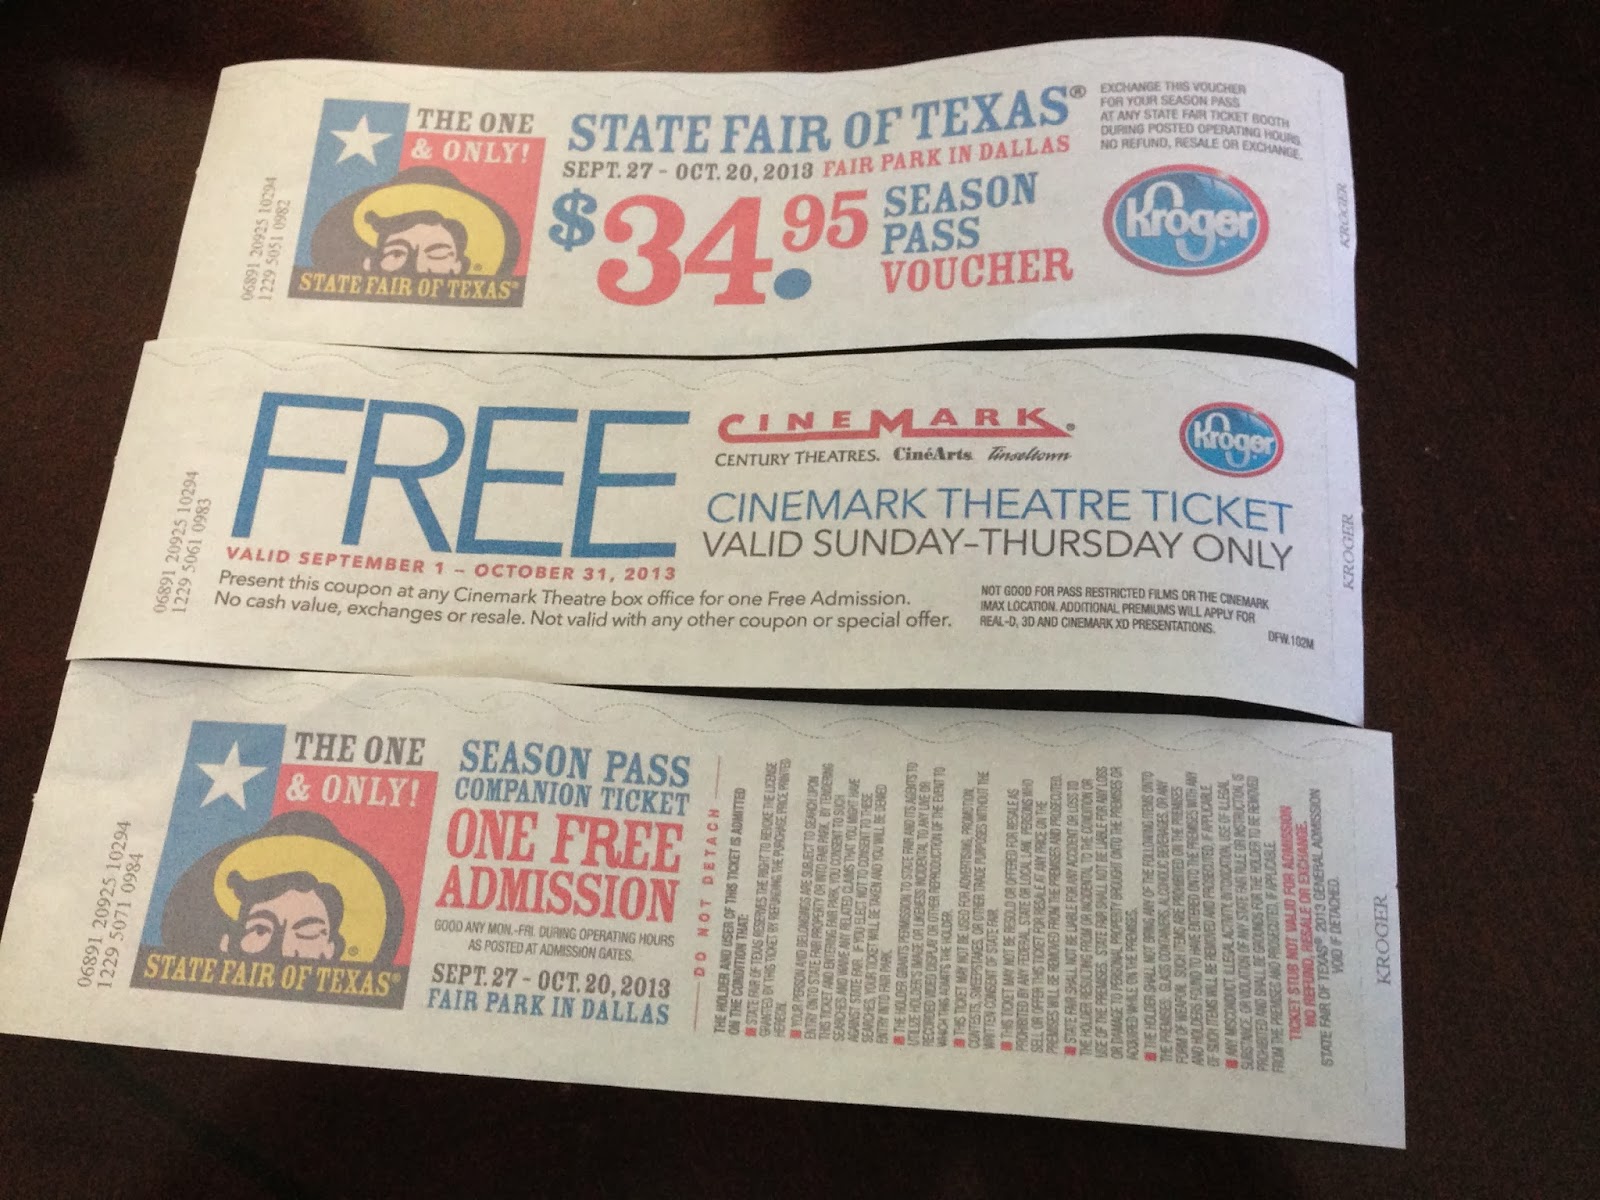 State Fair of Texas 2013: Purchasing Season Ticket to 2013 State Fair of Texas